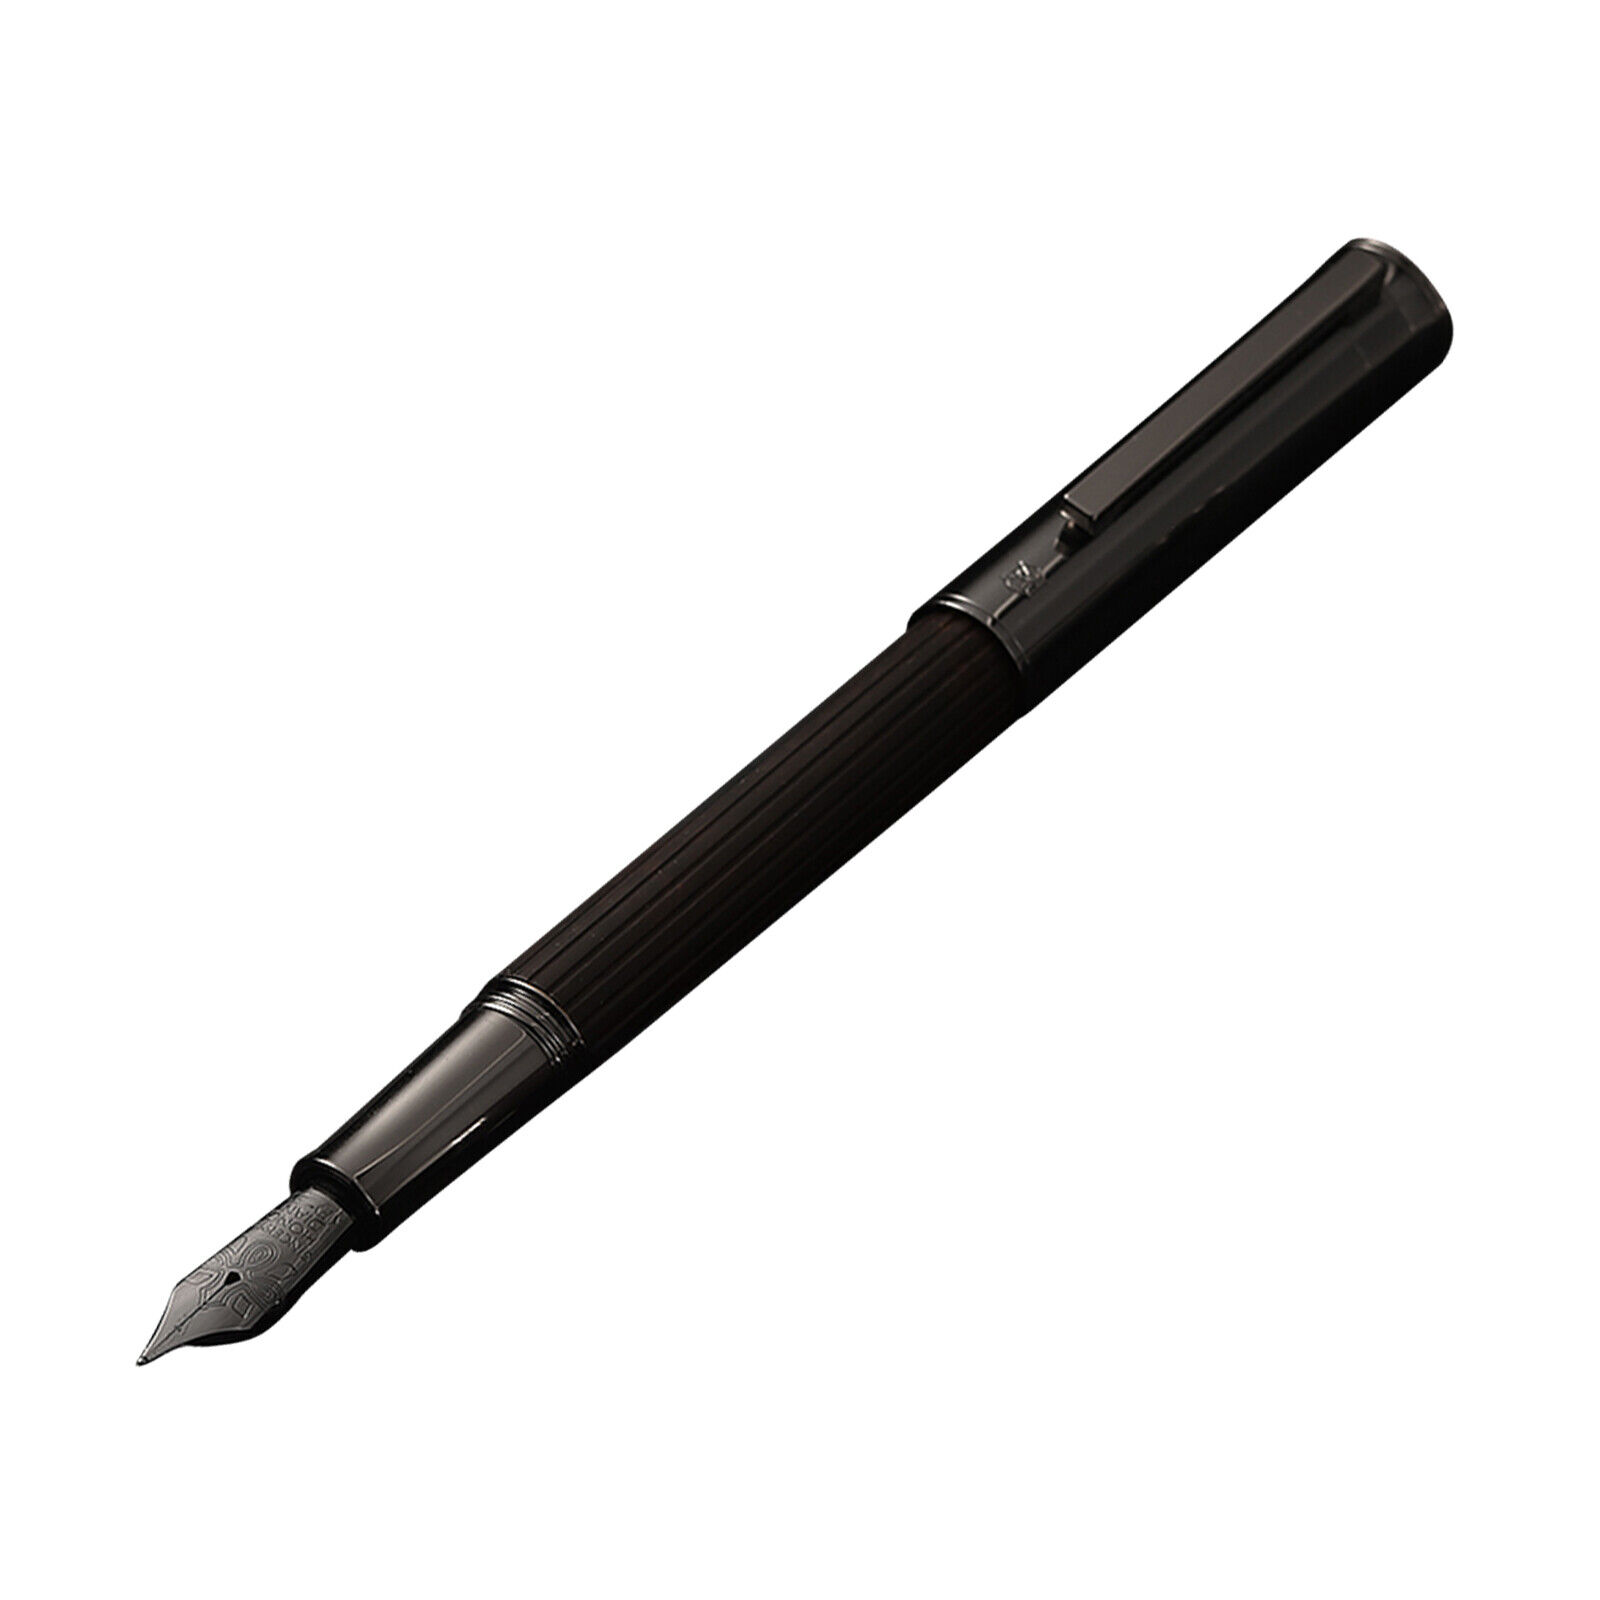 New Hongdian 1866 Wood Fountain Pen #35 EF/F Metal Retro Writing Office Gift Pen